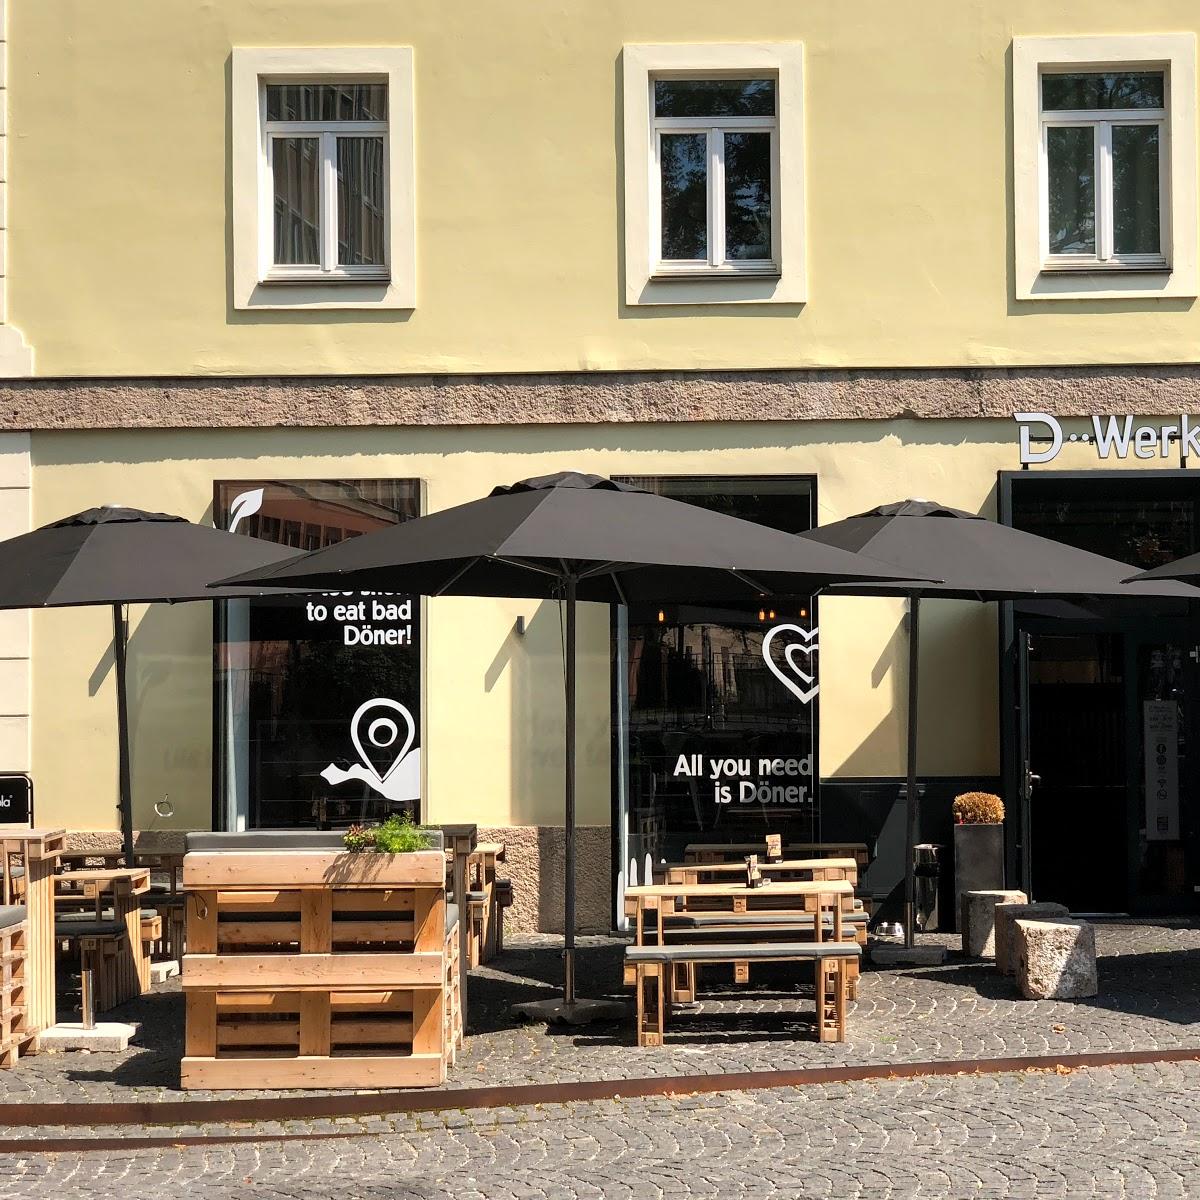 Restaurant "D••Werk" in Innsbruck